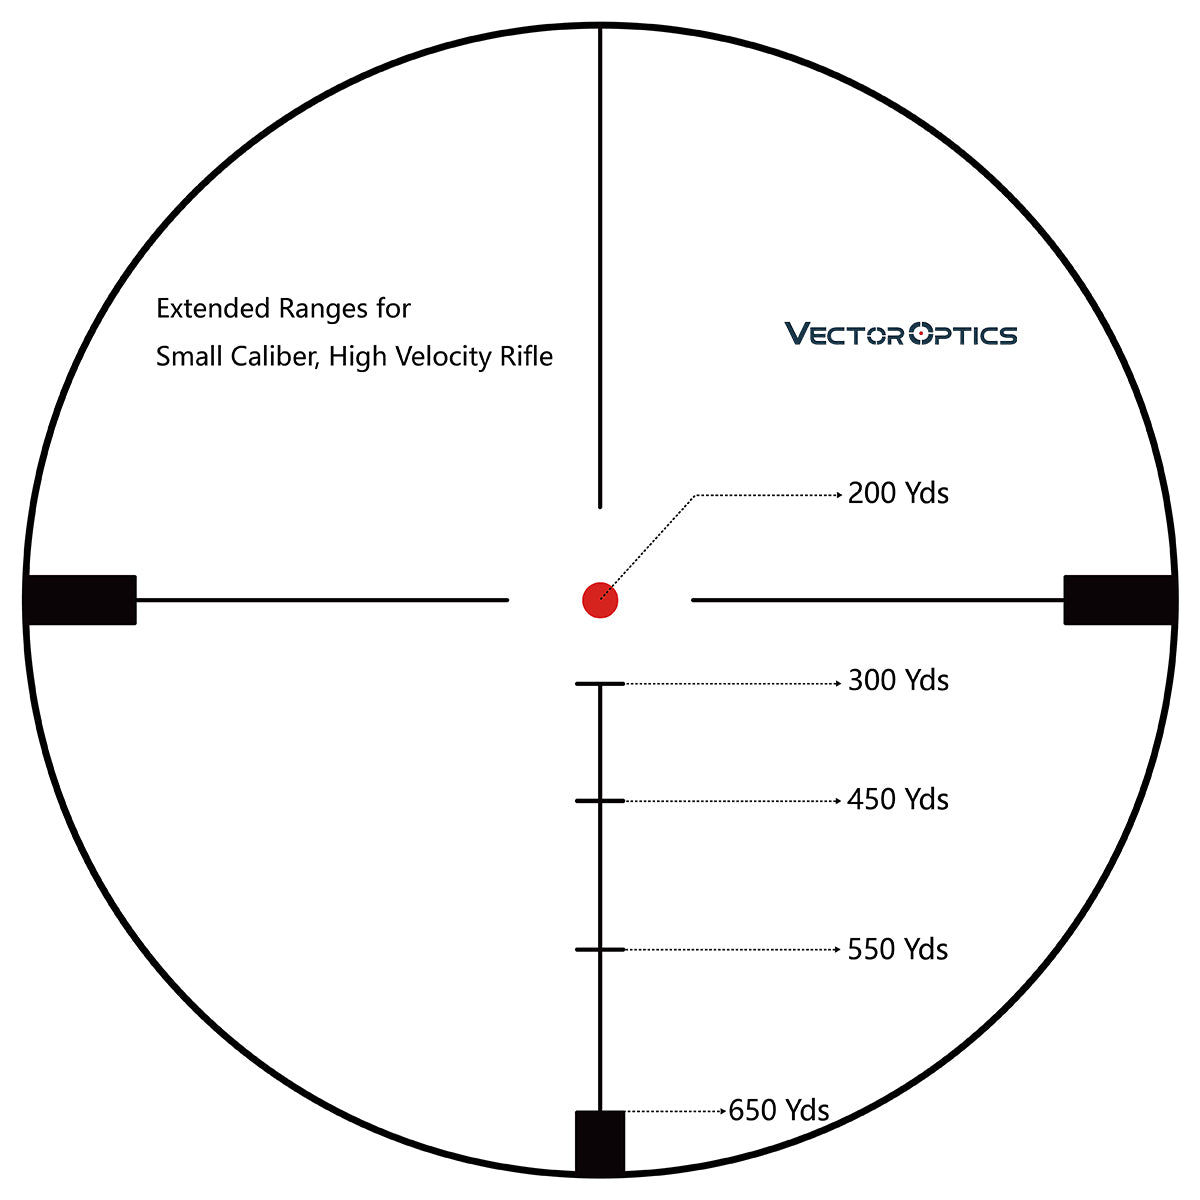 Vector Optics - Hugo. 3-12 x 44GT SFP Riflescope